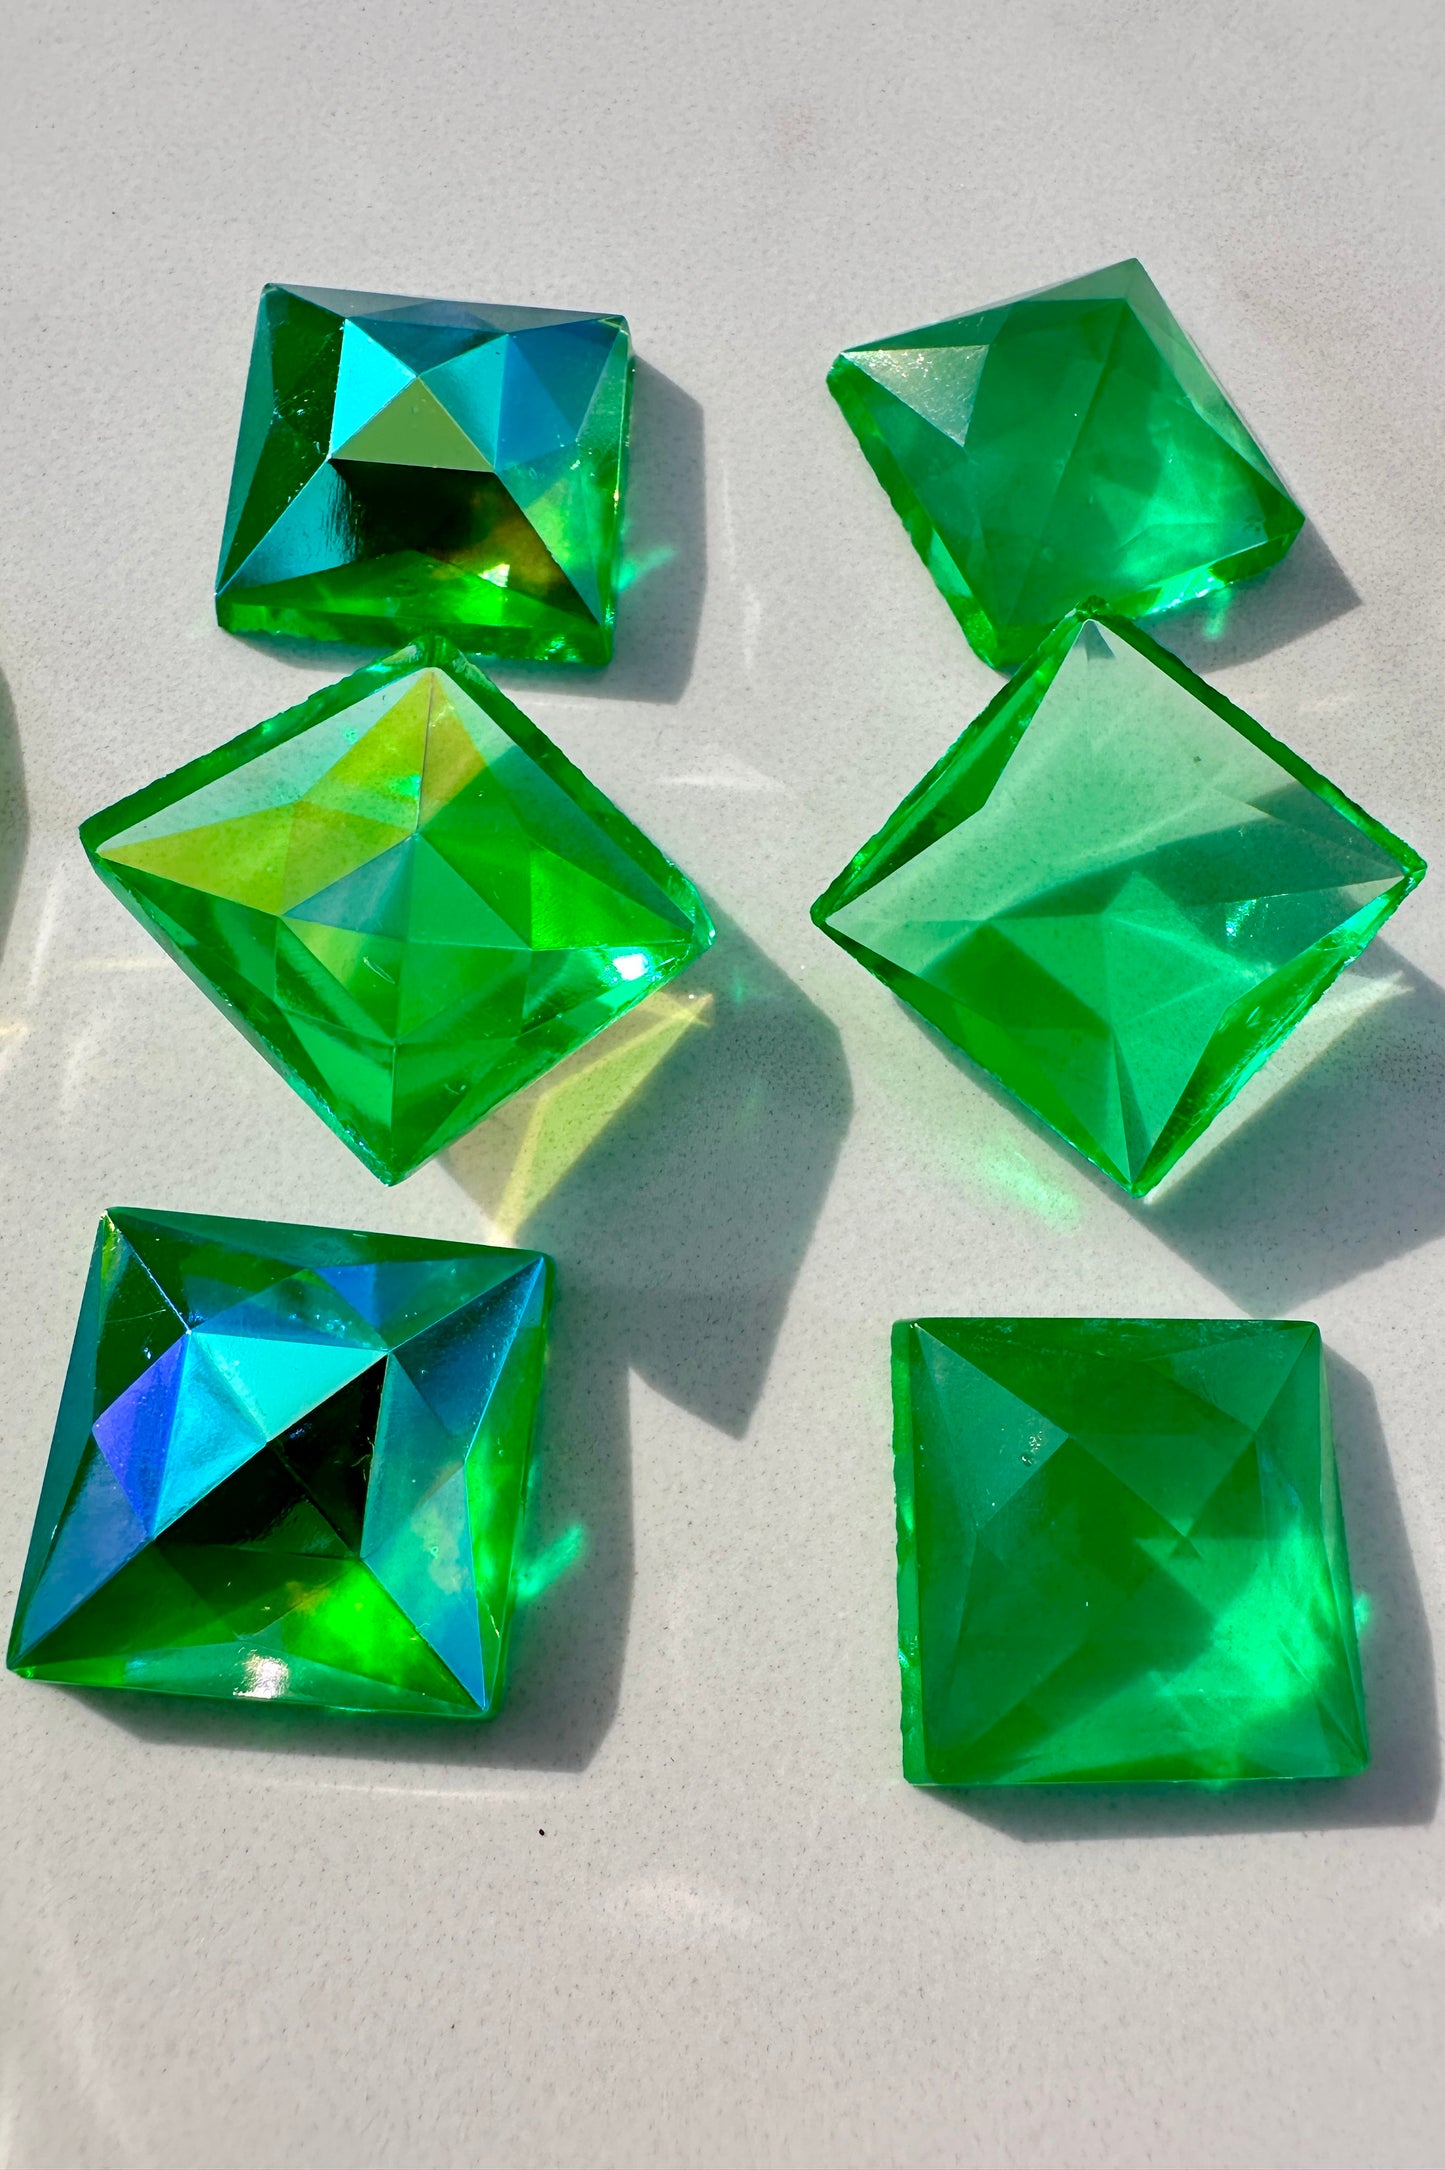 20x20mm Square High Faceted Uranium/Depression/Vaseline Green Glass Jewel - UV Reactive - Glows Under Blacklight